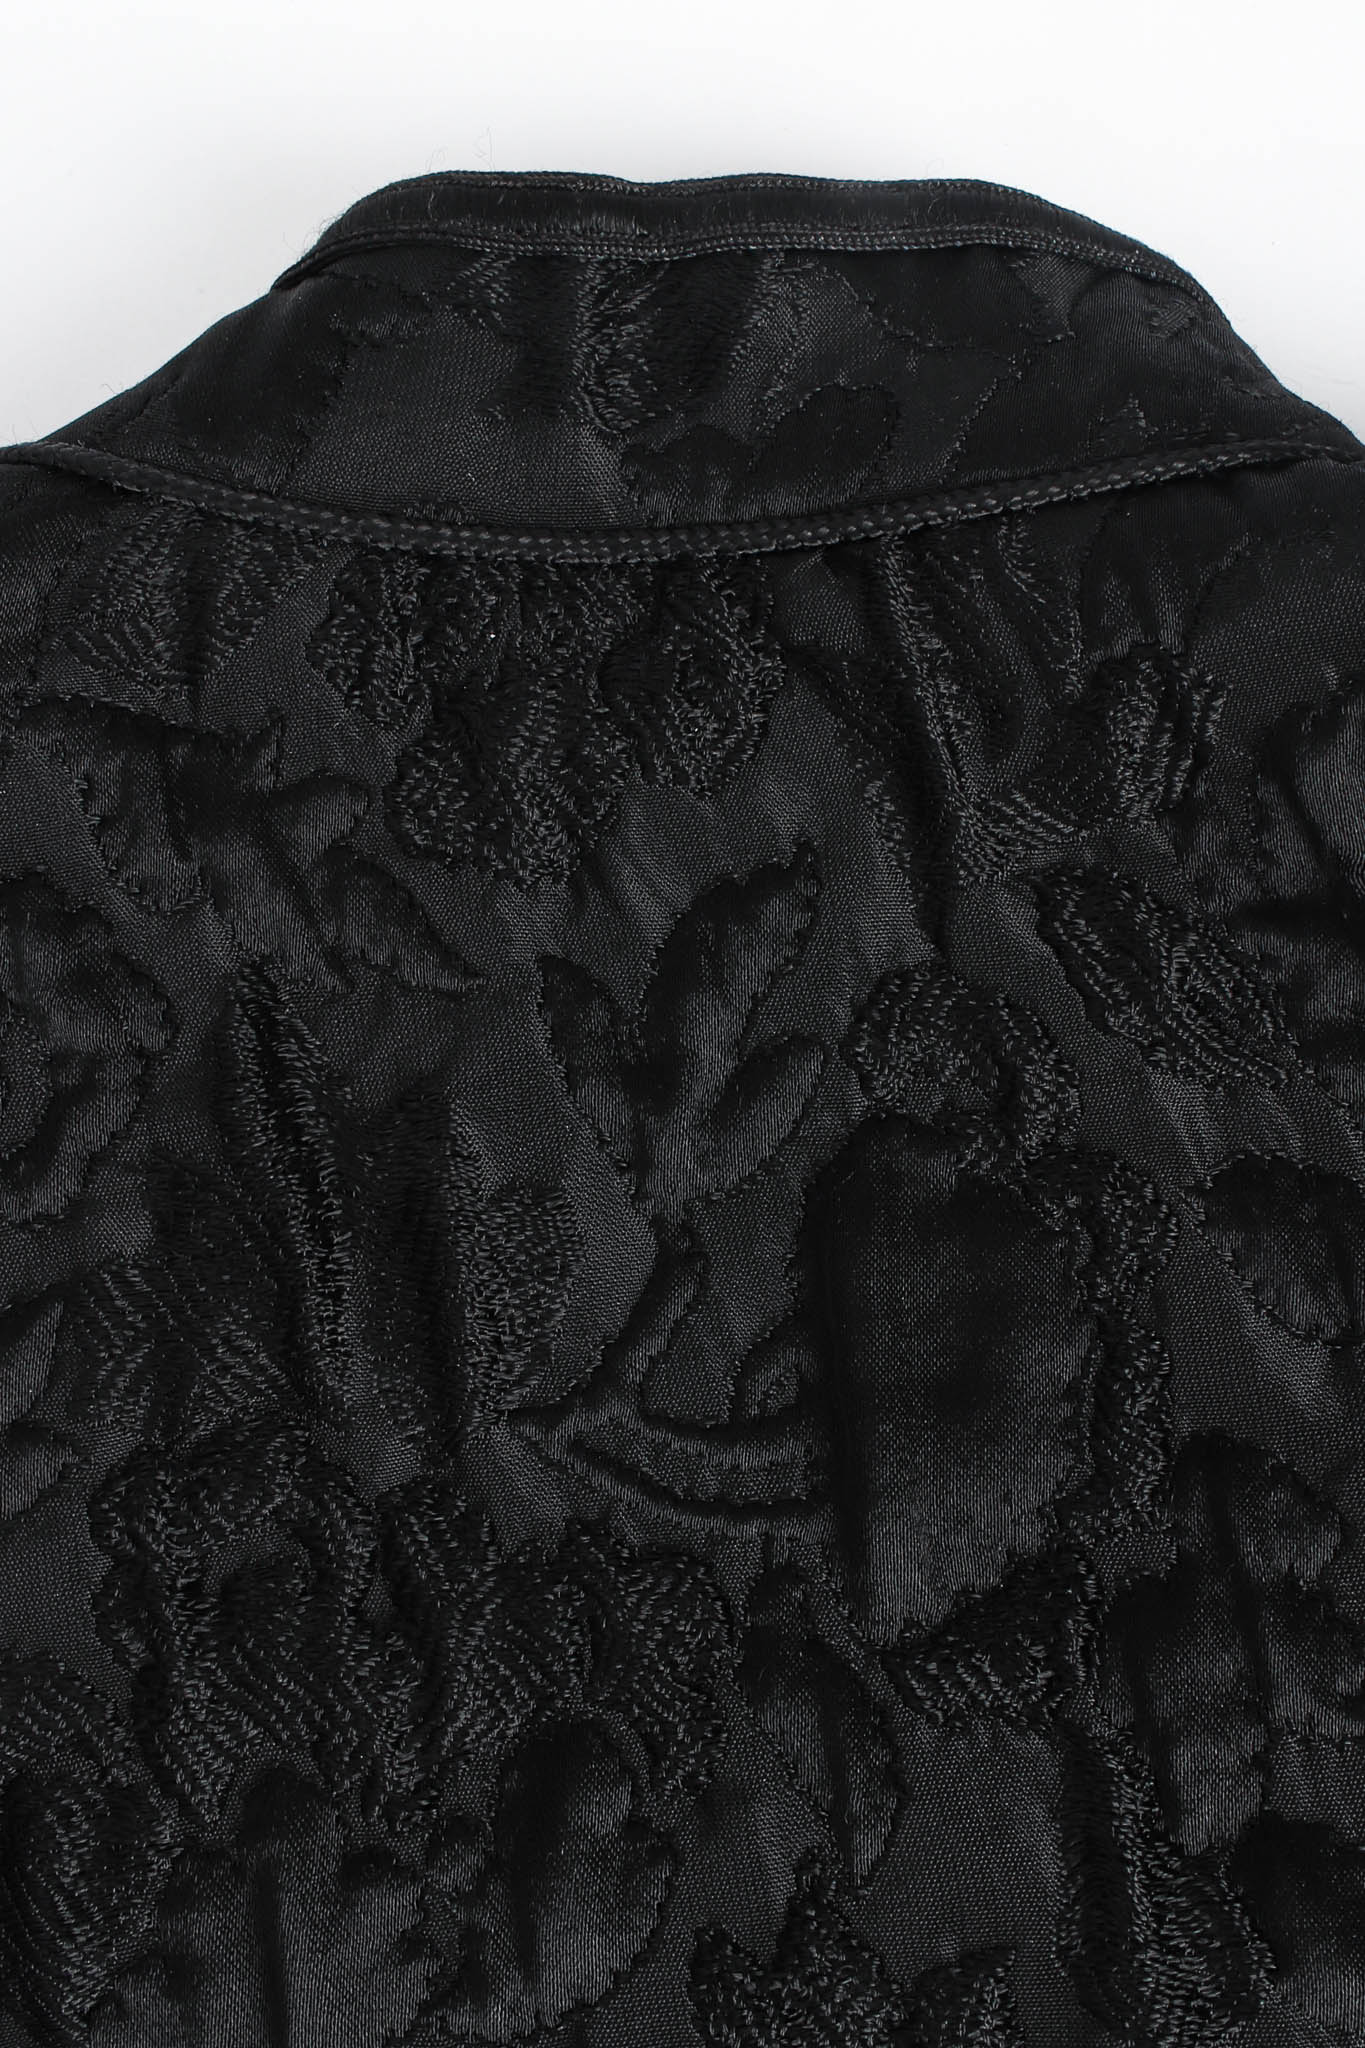 Vintage Yves Saint Laurent Floral Embroidered Quilted Jacket back collar @ Recess LA